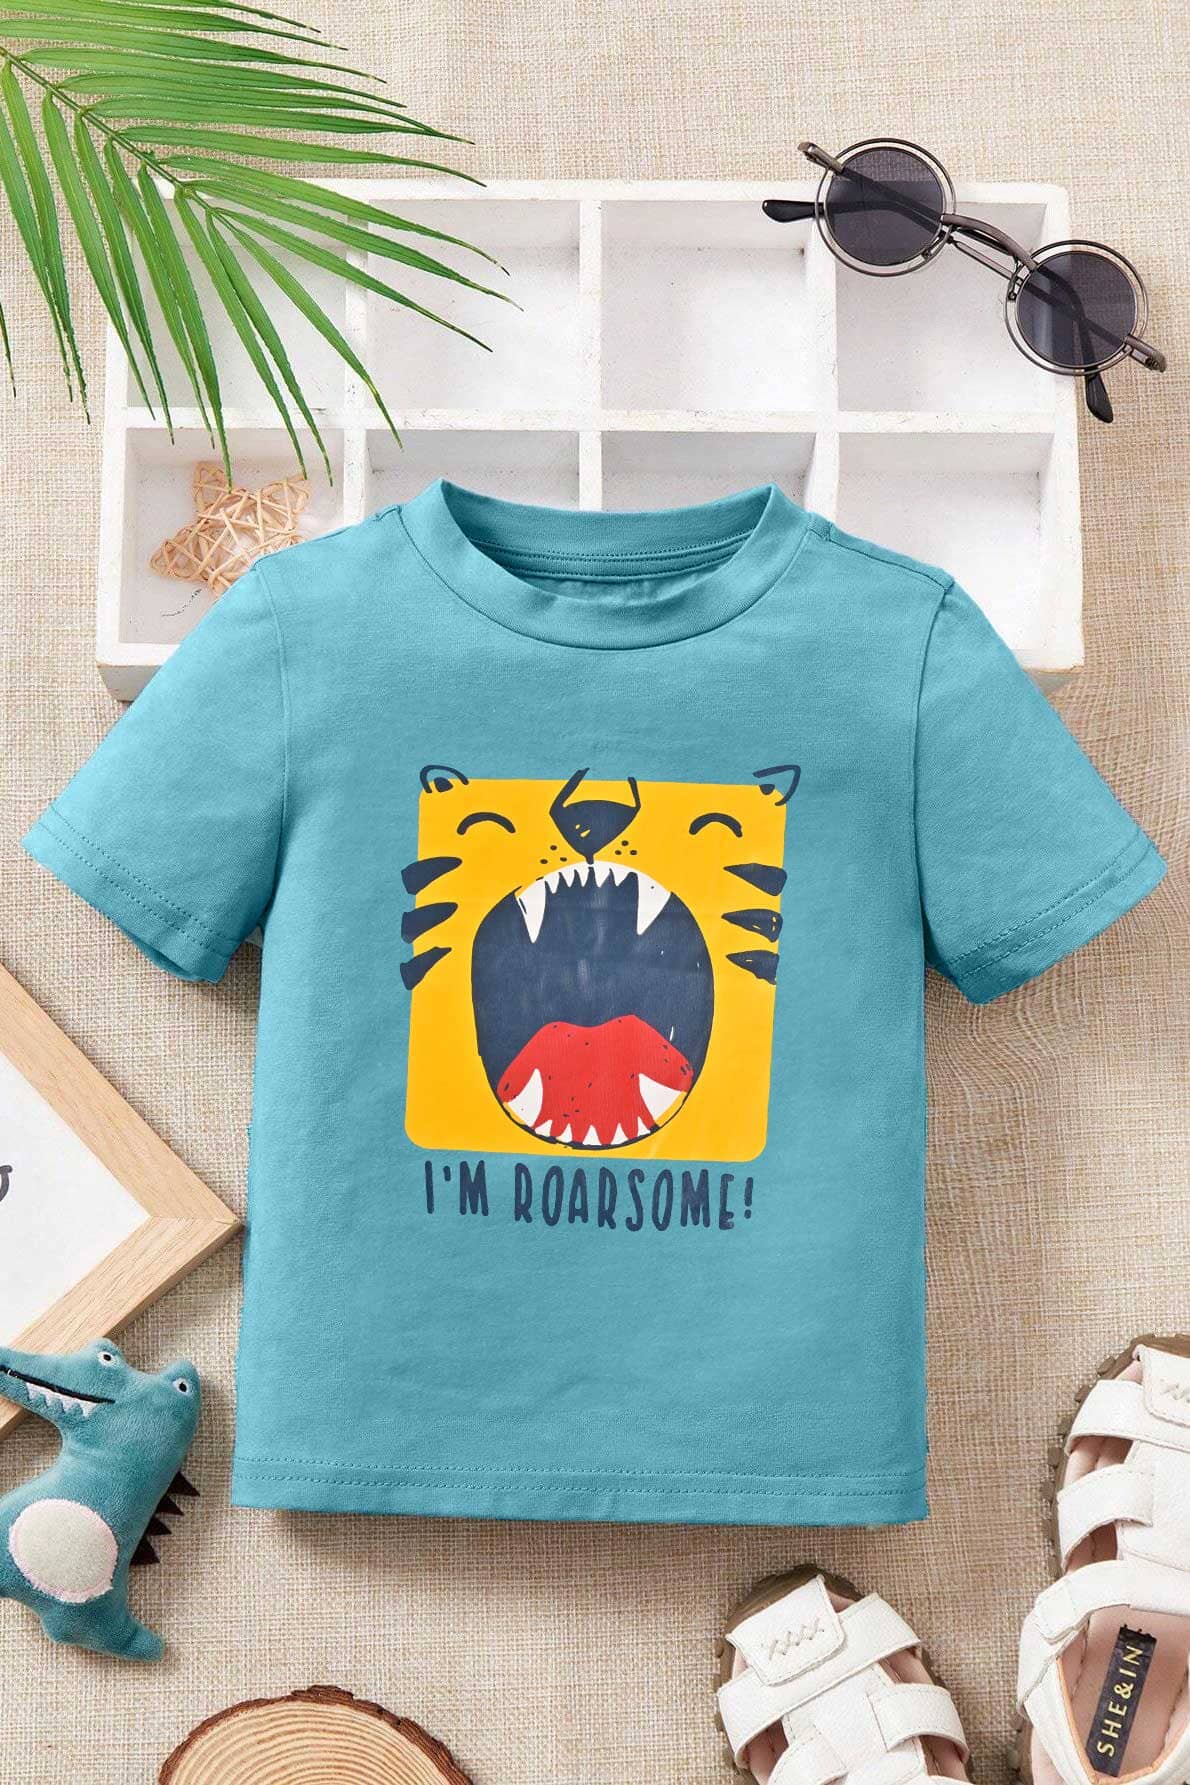 Polo Republica Boy's I'M Roarsome! Printed Tee Shirt